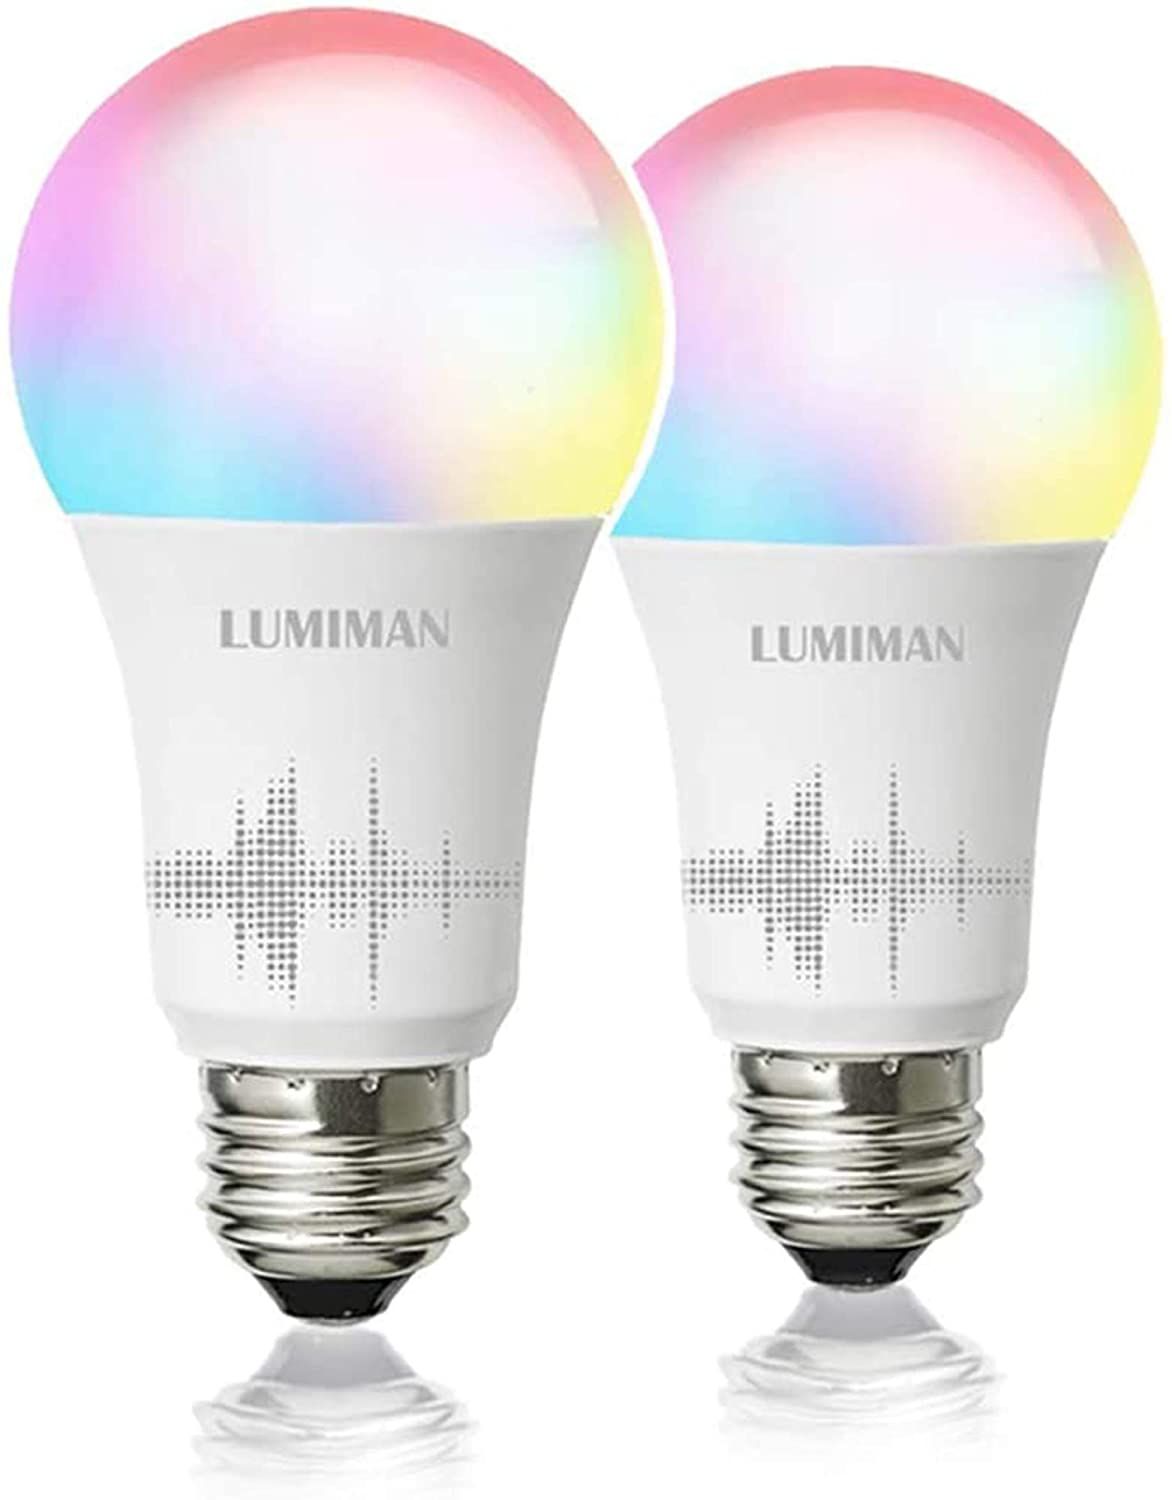 LUMIMAN Smart WIFI Light Bulb a